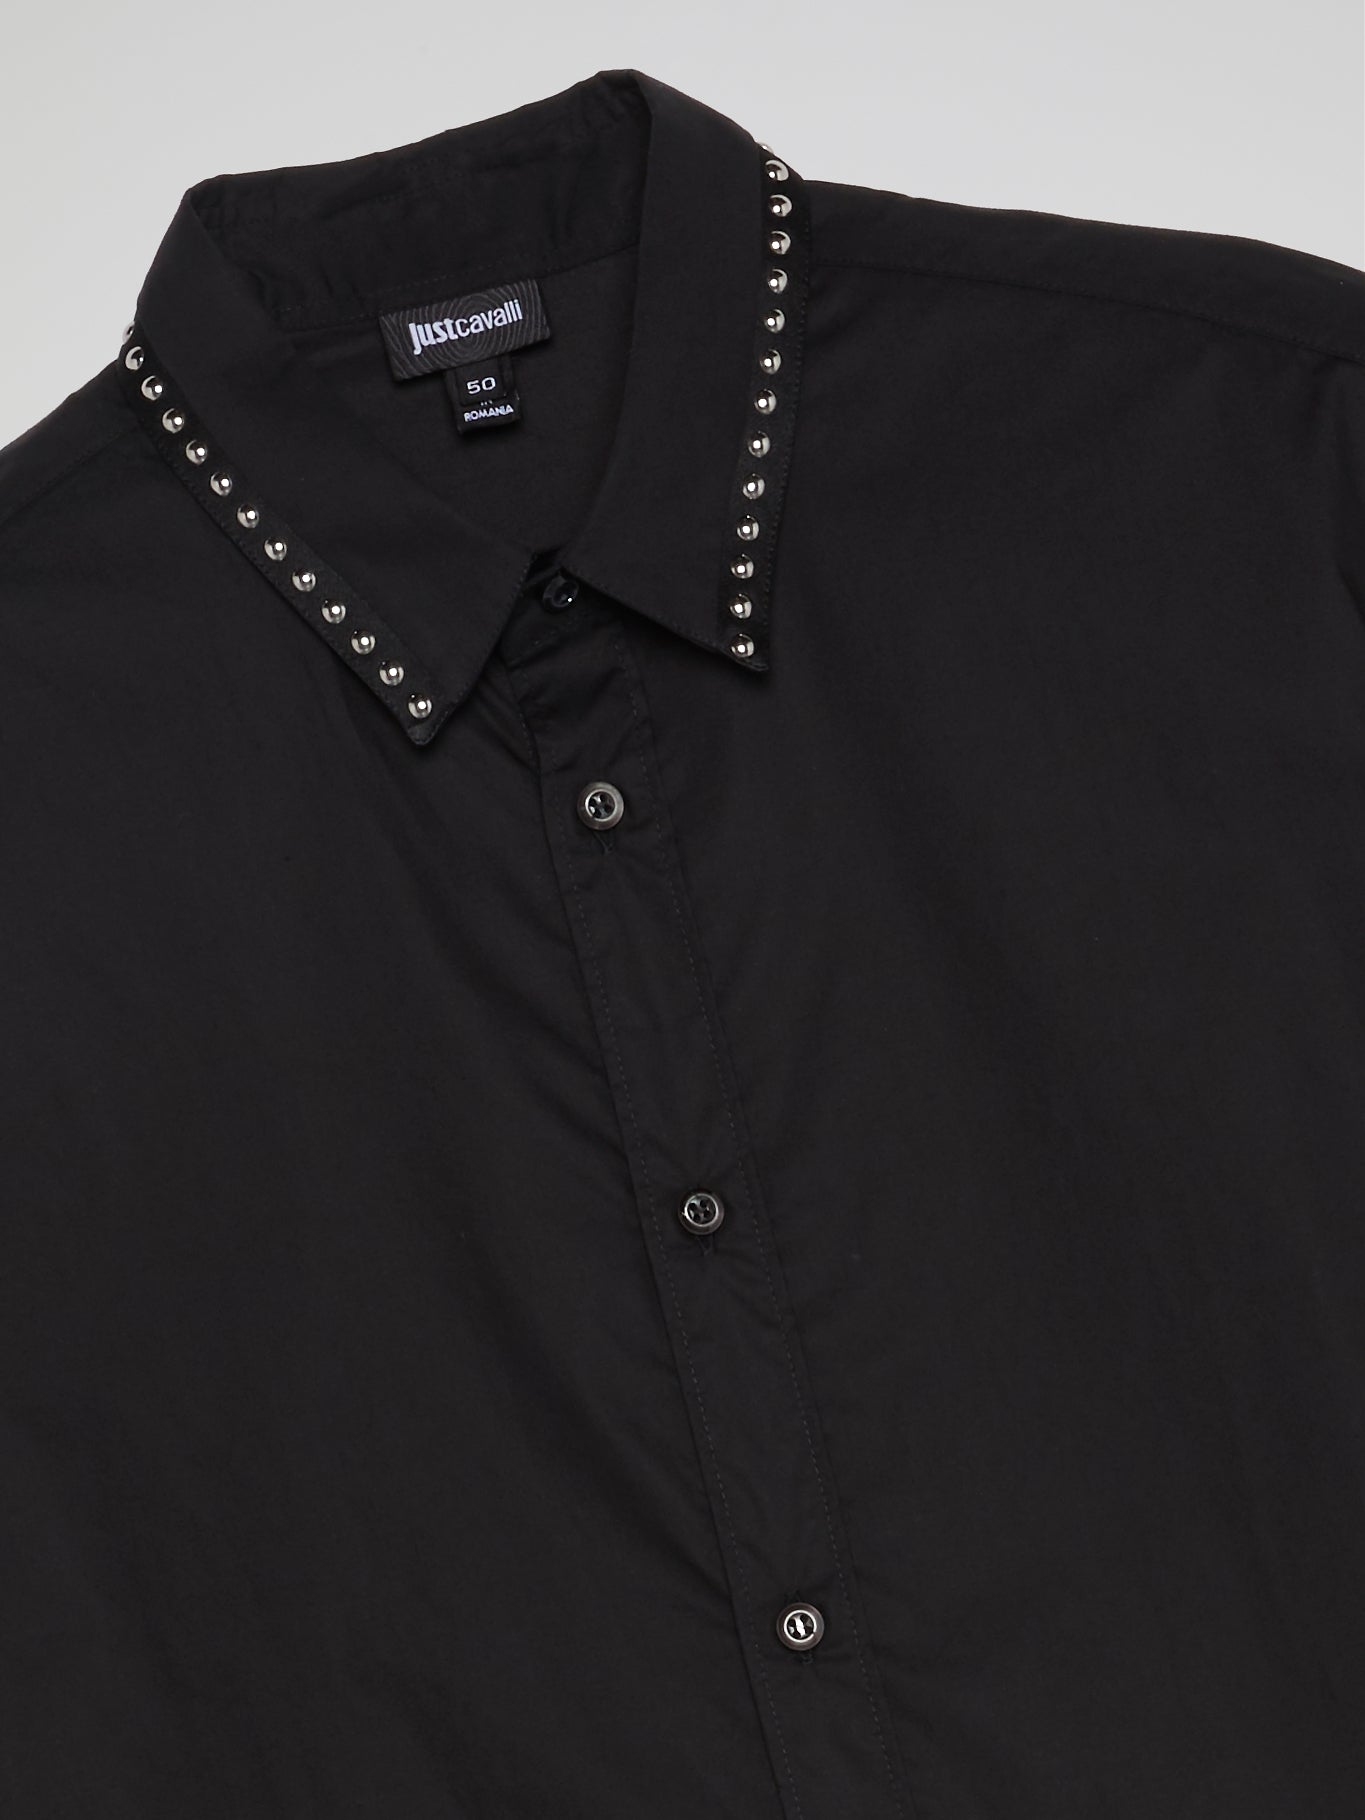 Black Studded Trim Shirt